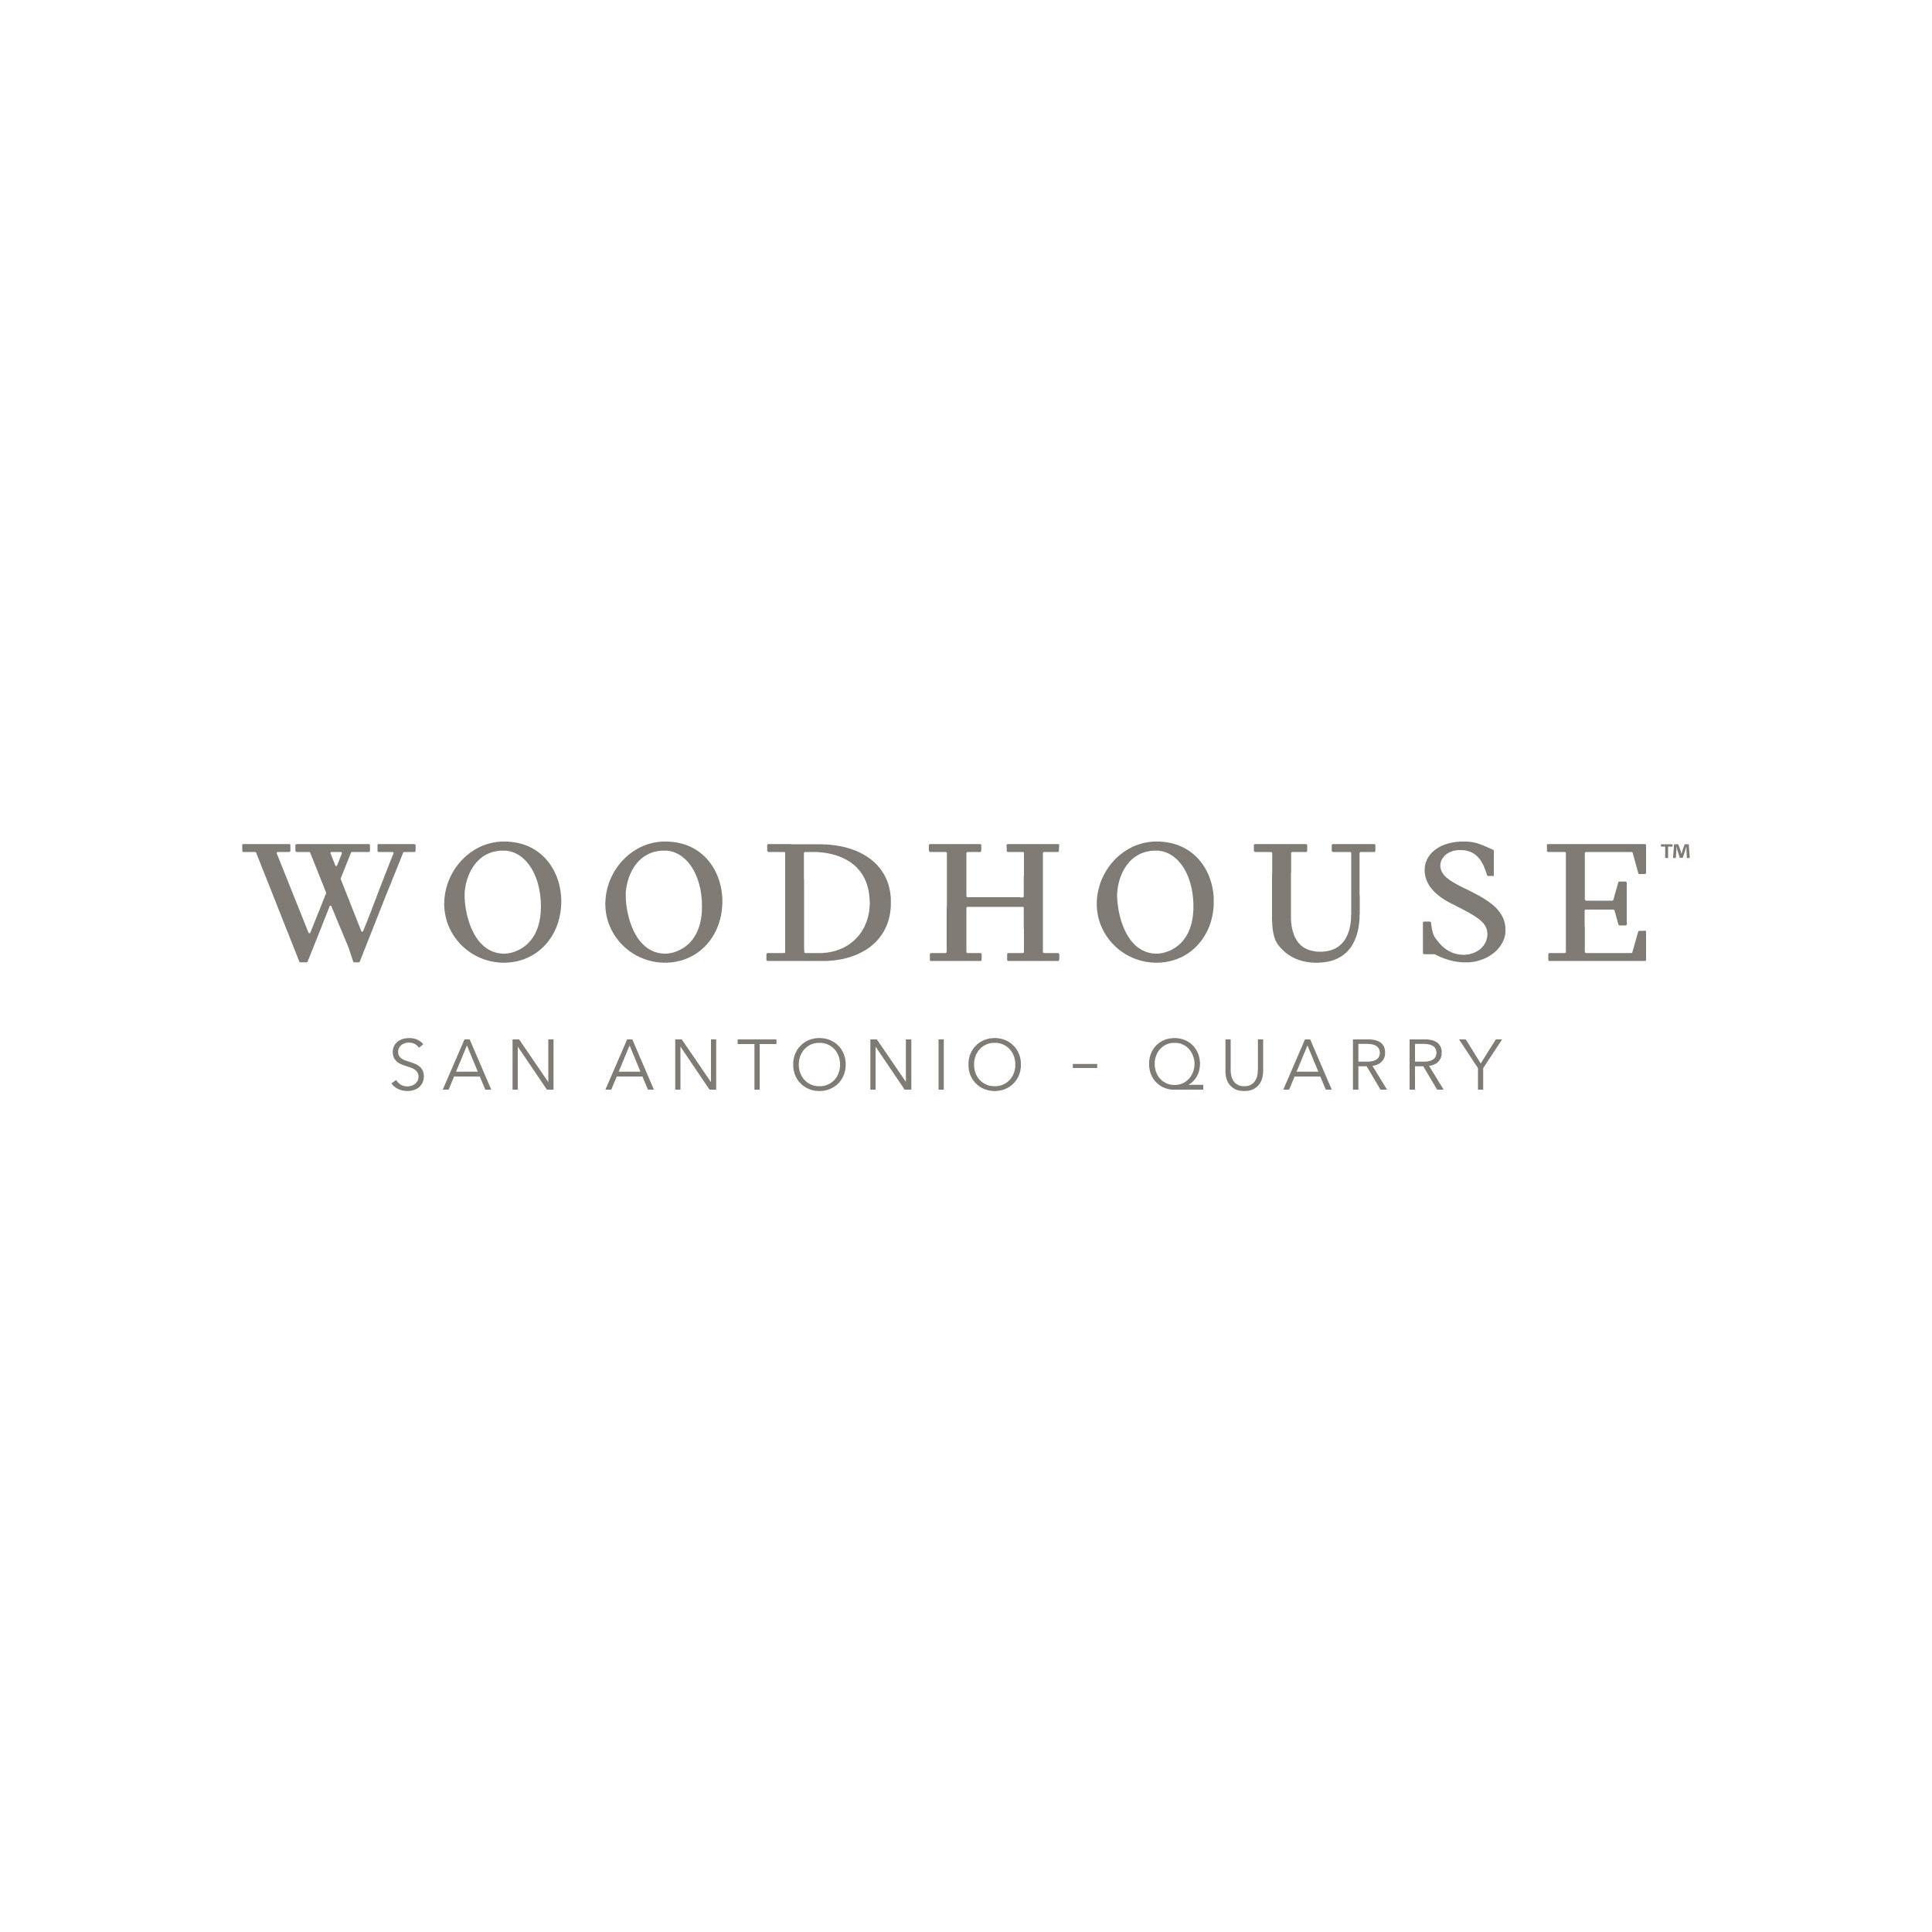 Woodhouse Spa - San Antonio - Quarry